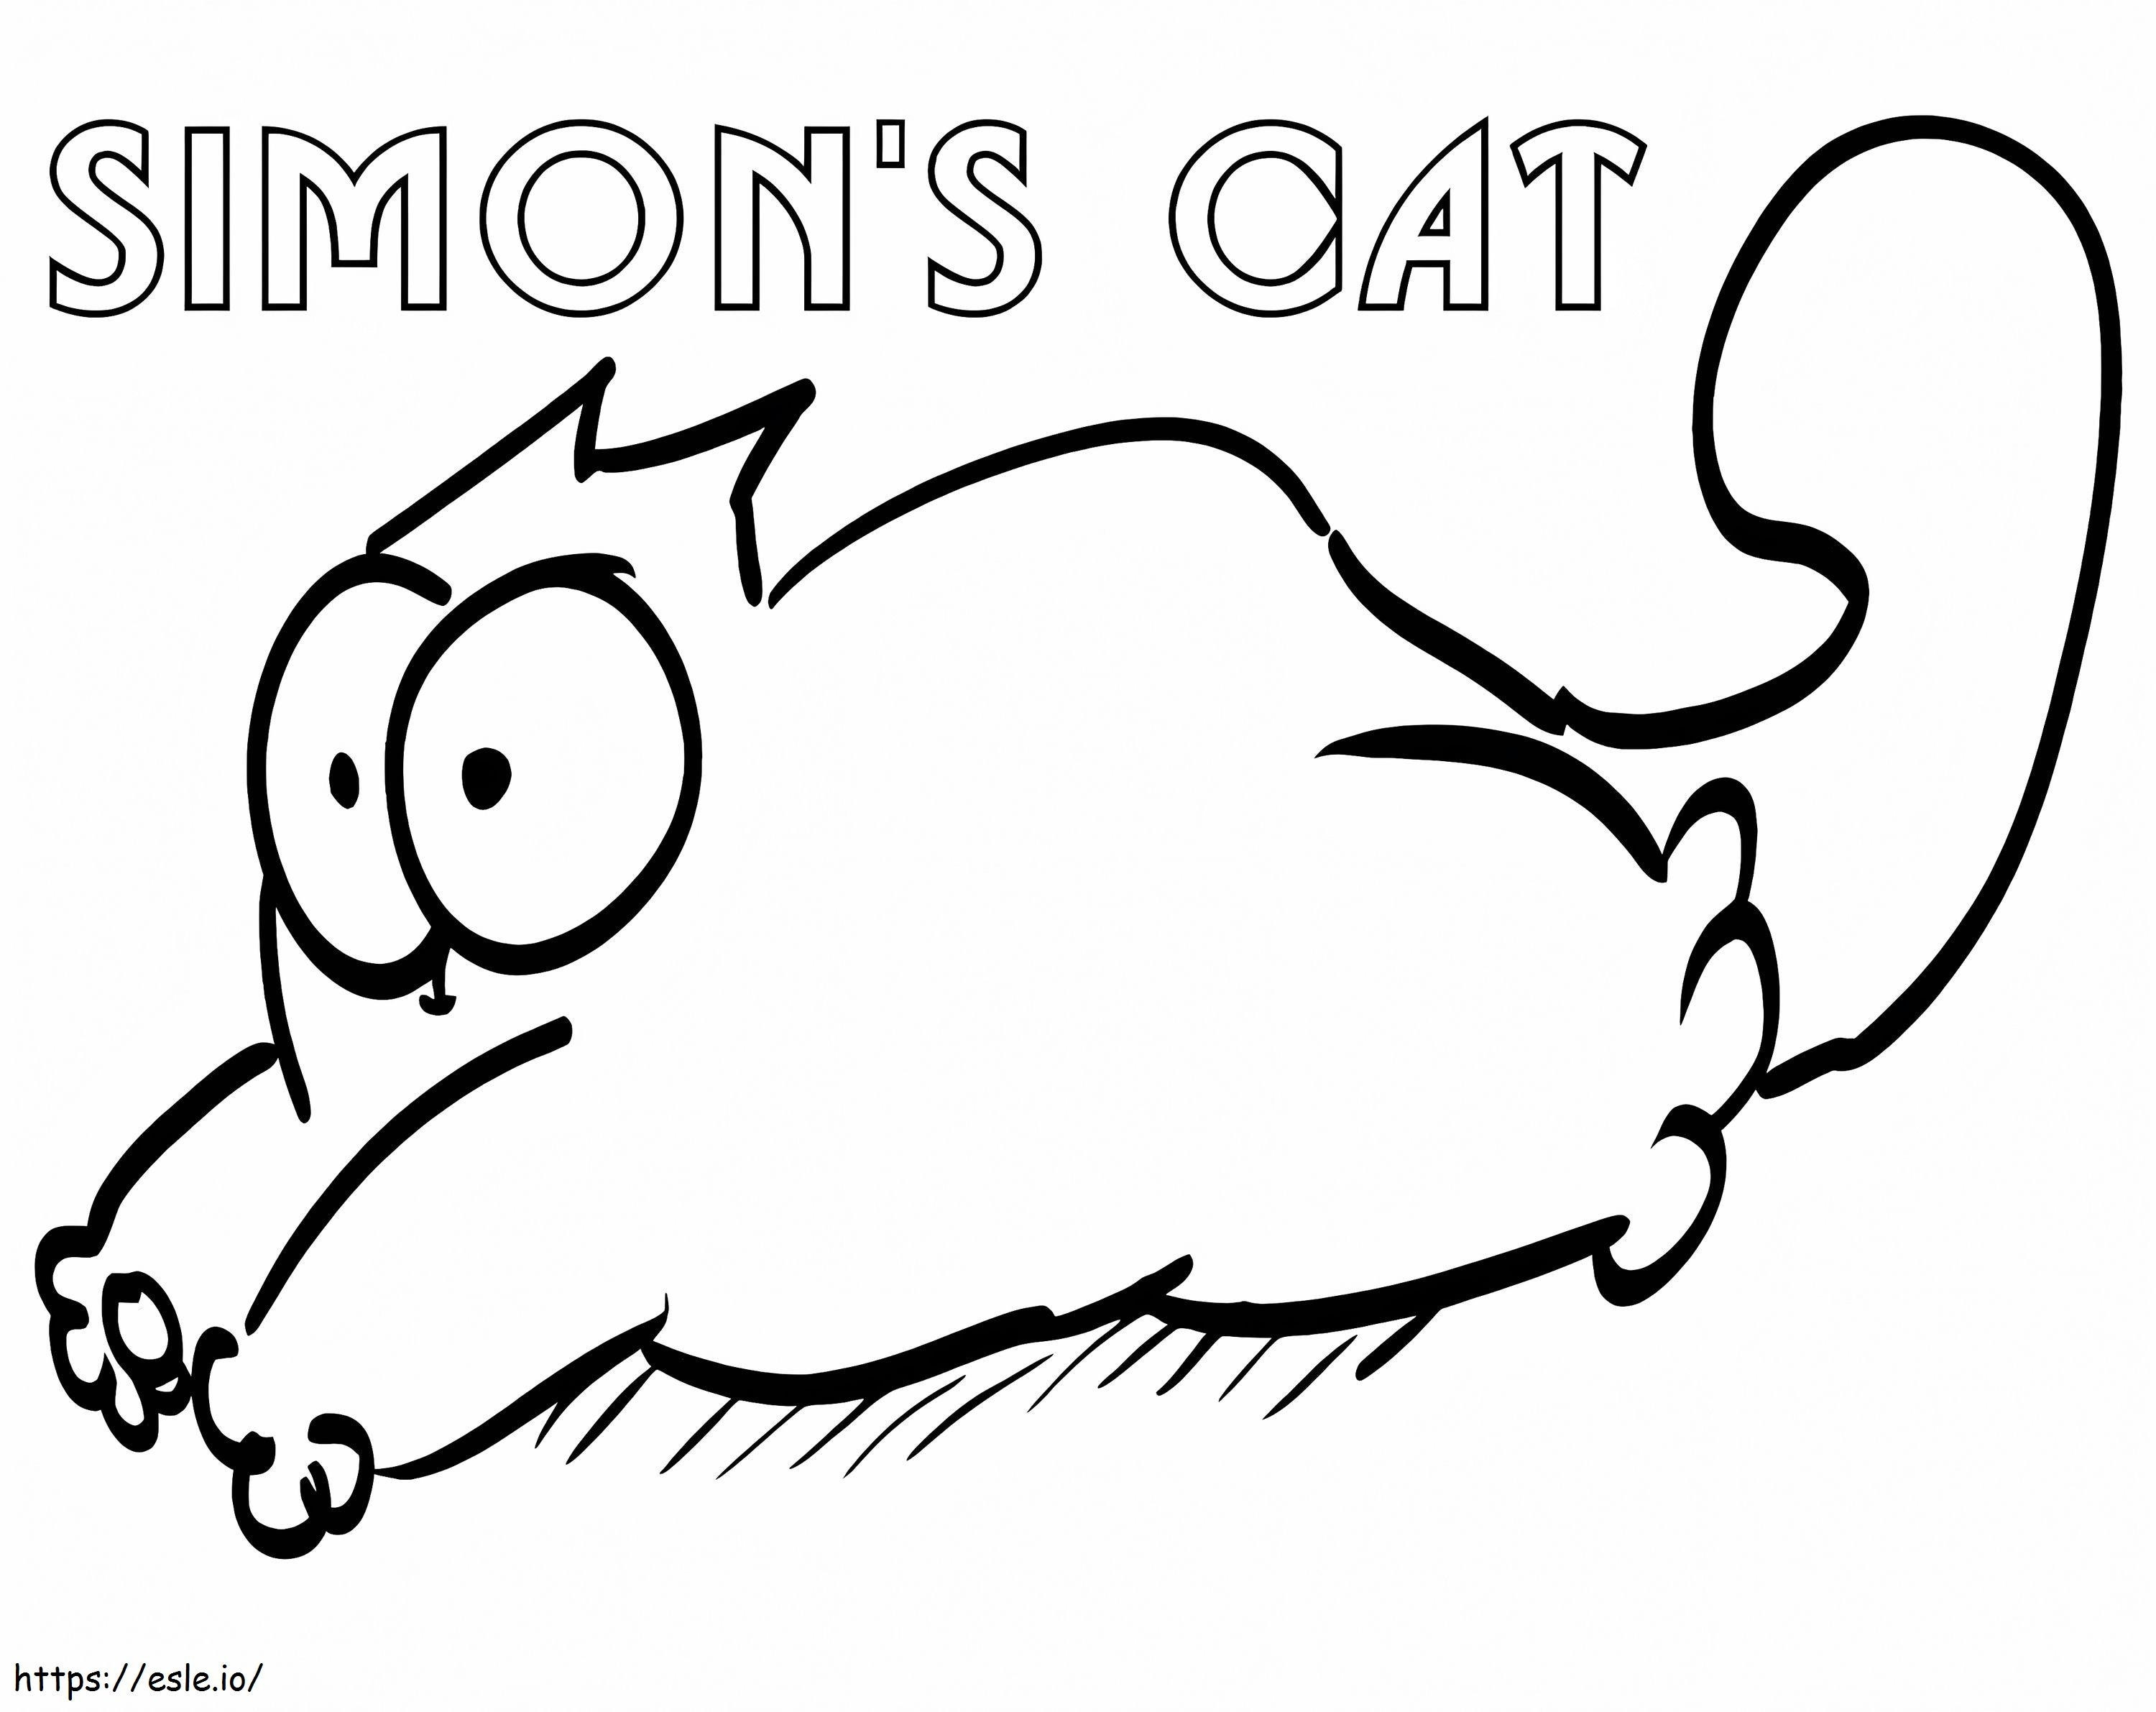 Simons Katze 2 ausmalbilder